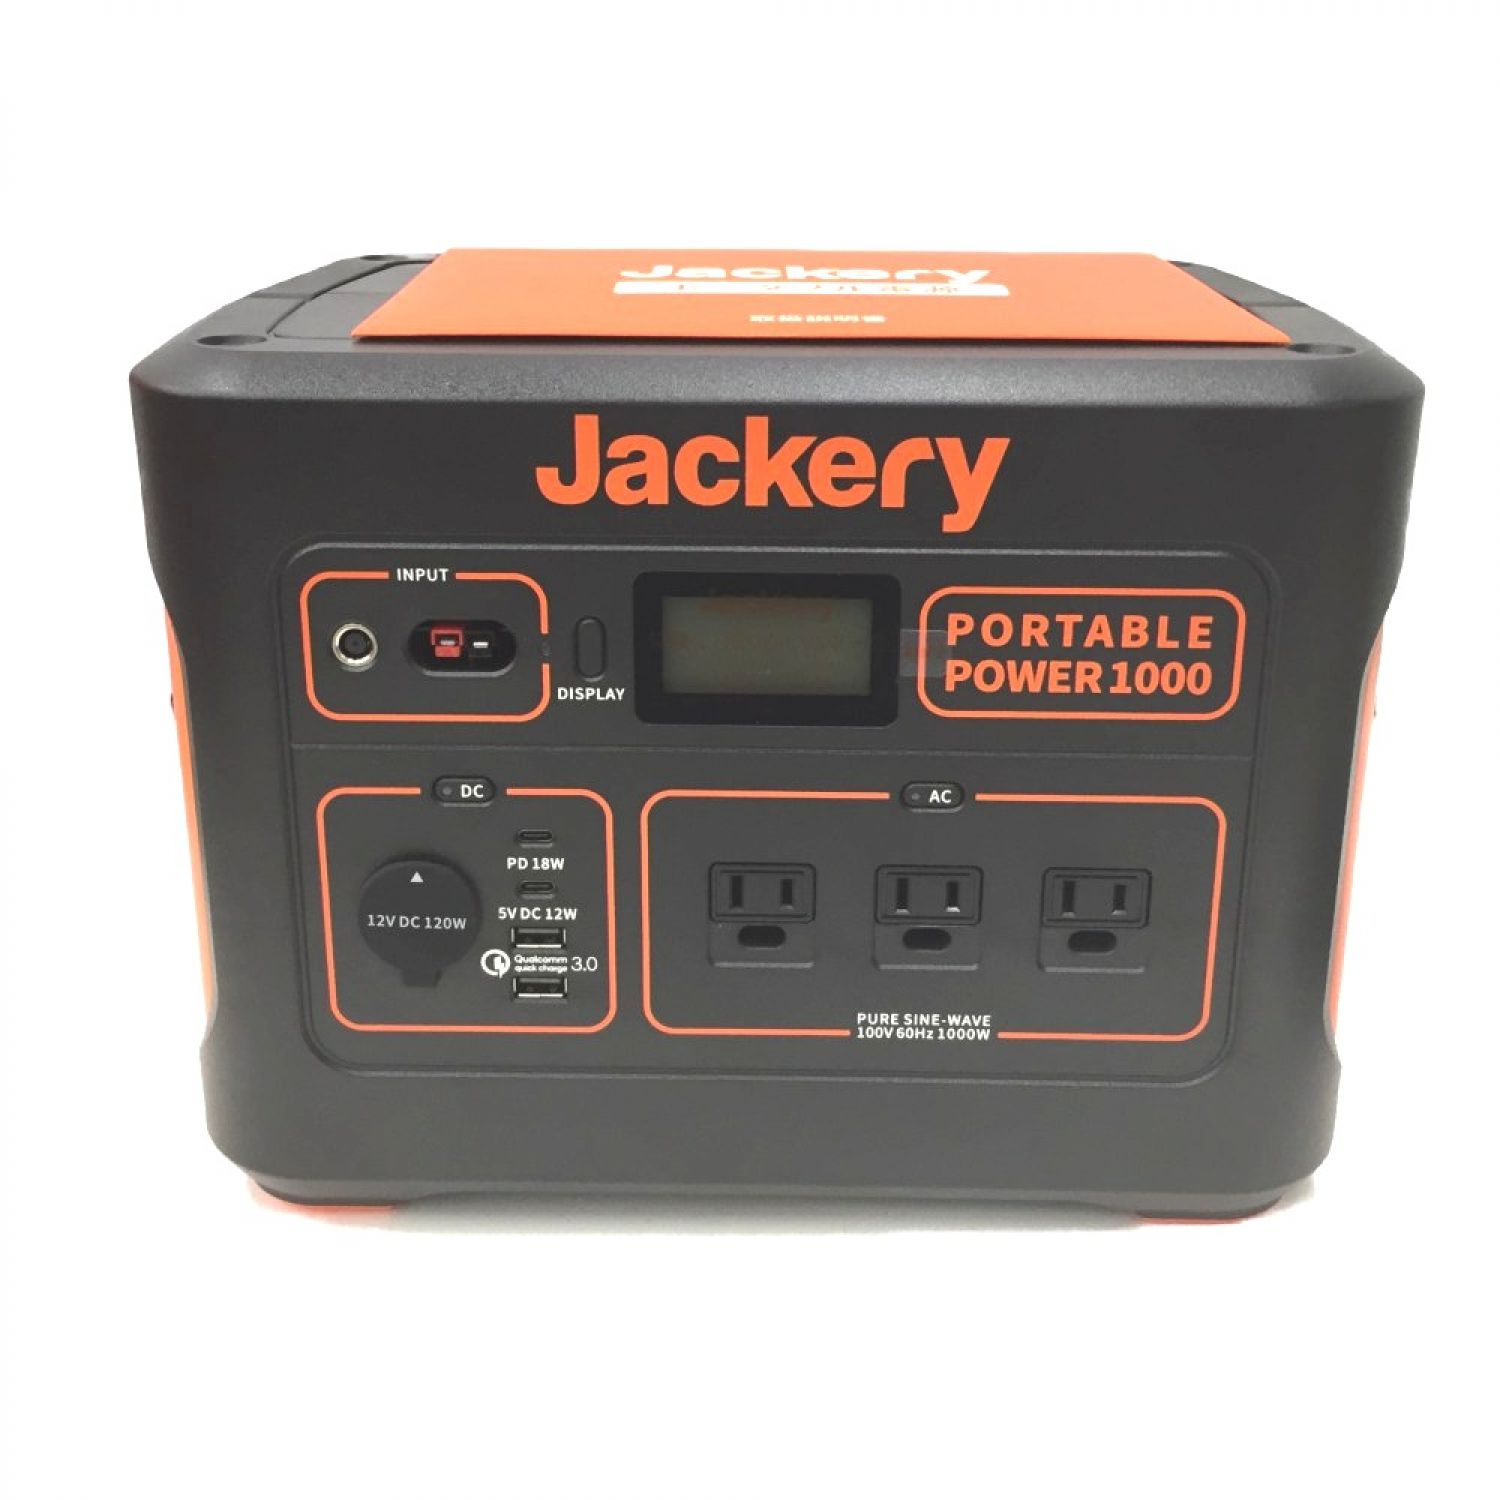 Jackery 1000 ポータブル電源 PTB101 大容量 278400mAh 1002Wh 蓄電池 非常用電源 ジャクリ 本体